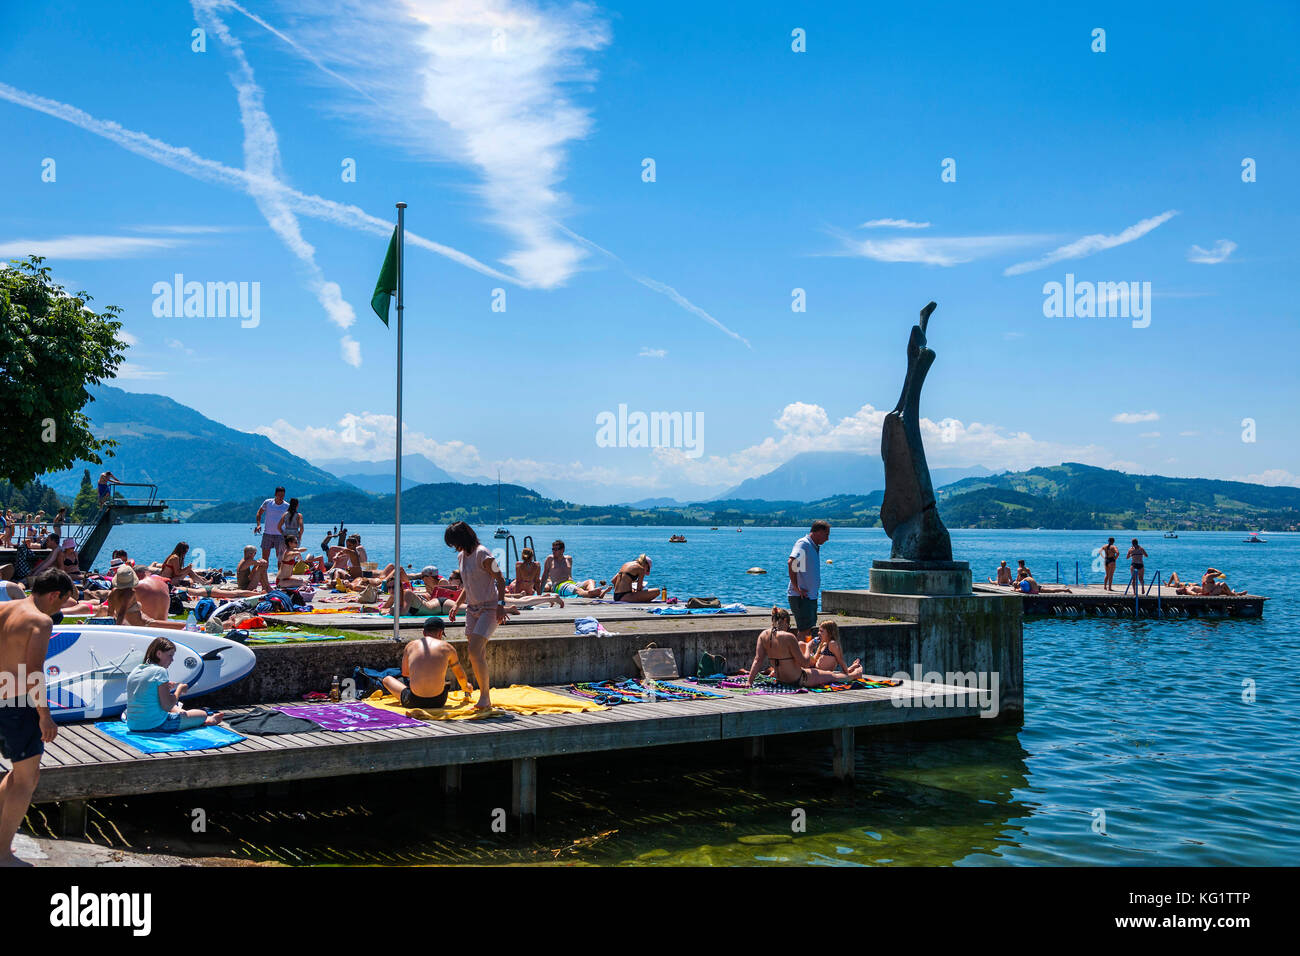 Zug, Kanton Zug, Schweiz : Consulte - Zuger Schwimmbad Foto de stock